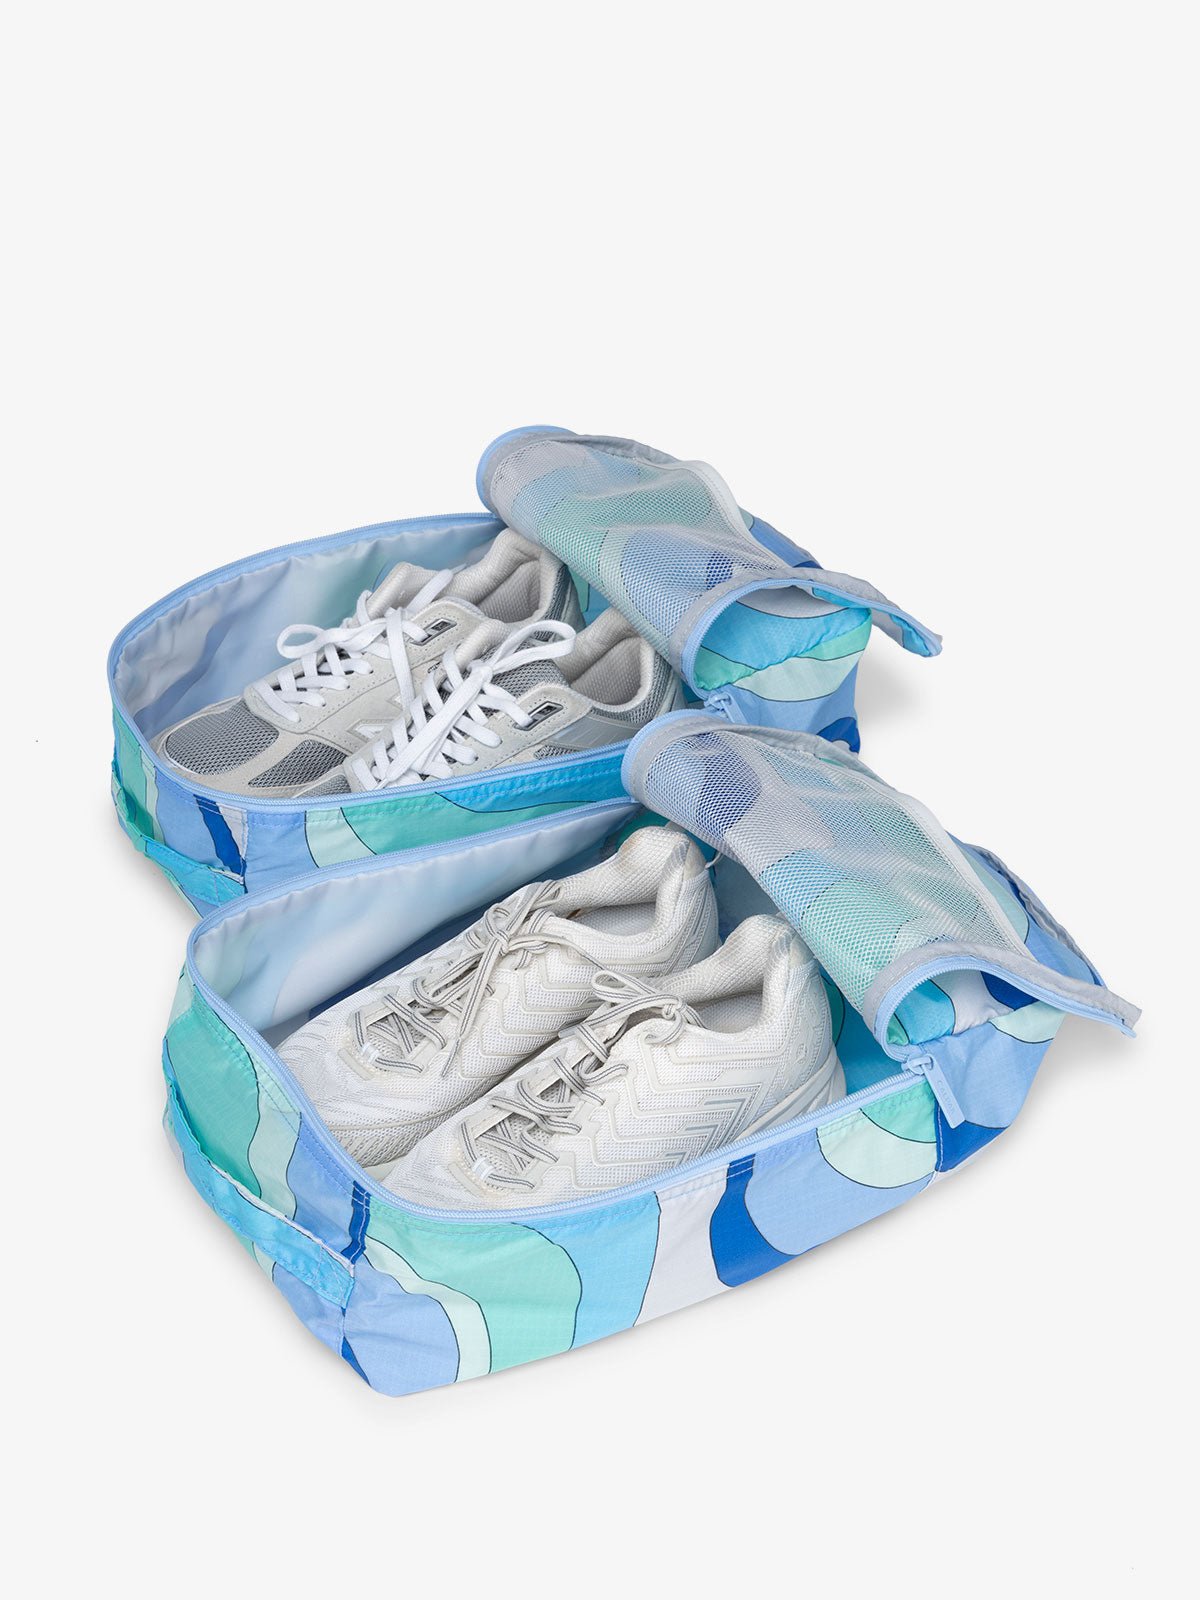 shoe bag set with shoes inside